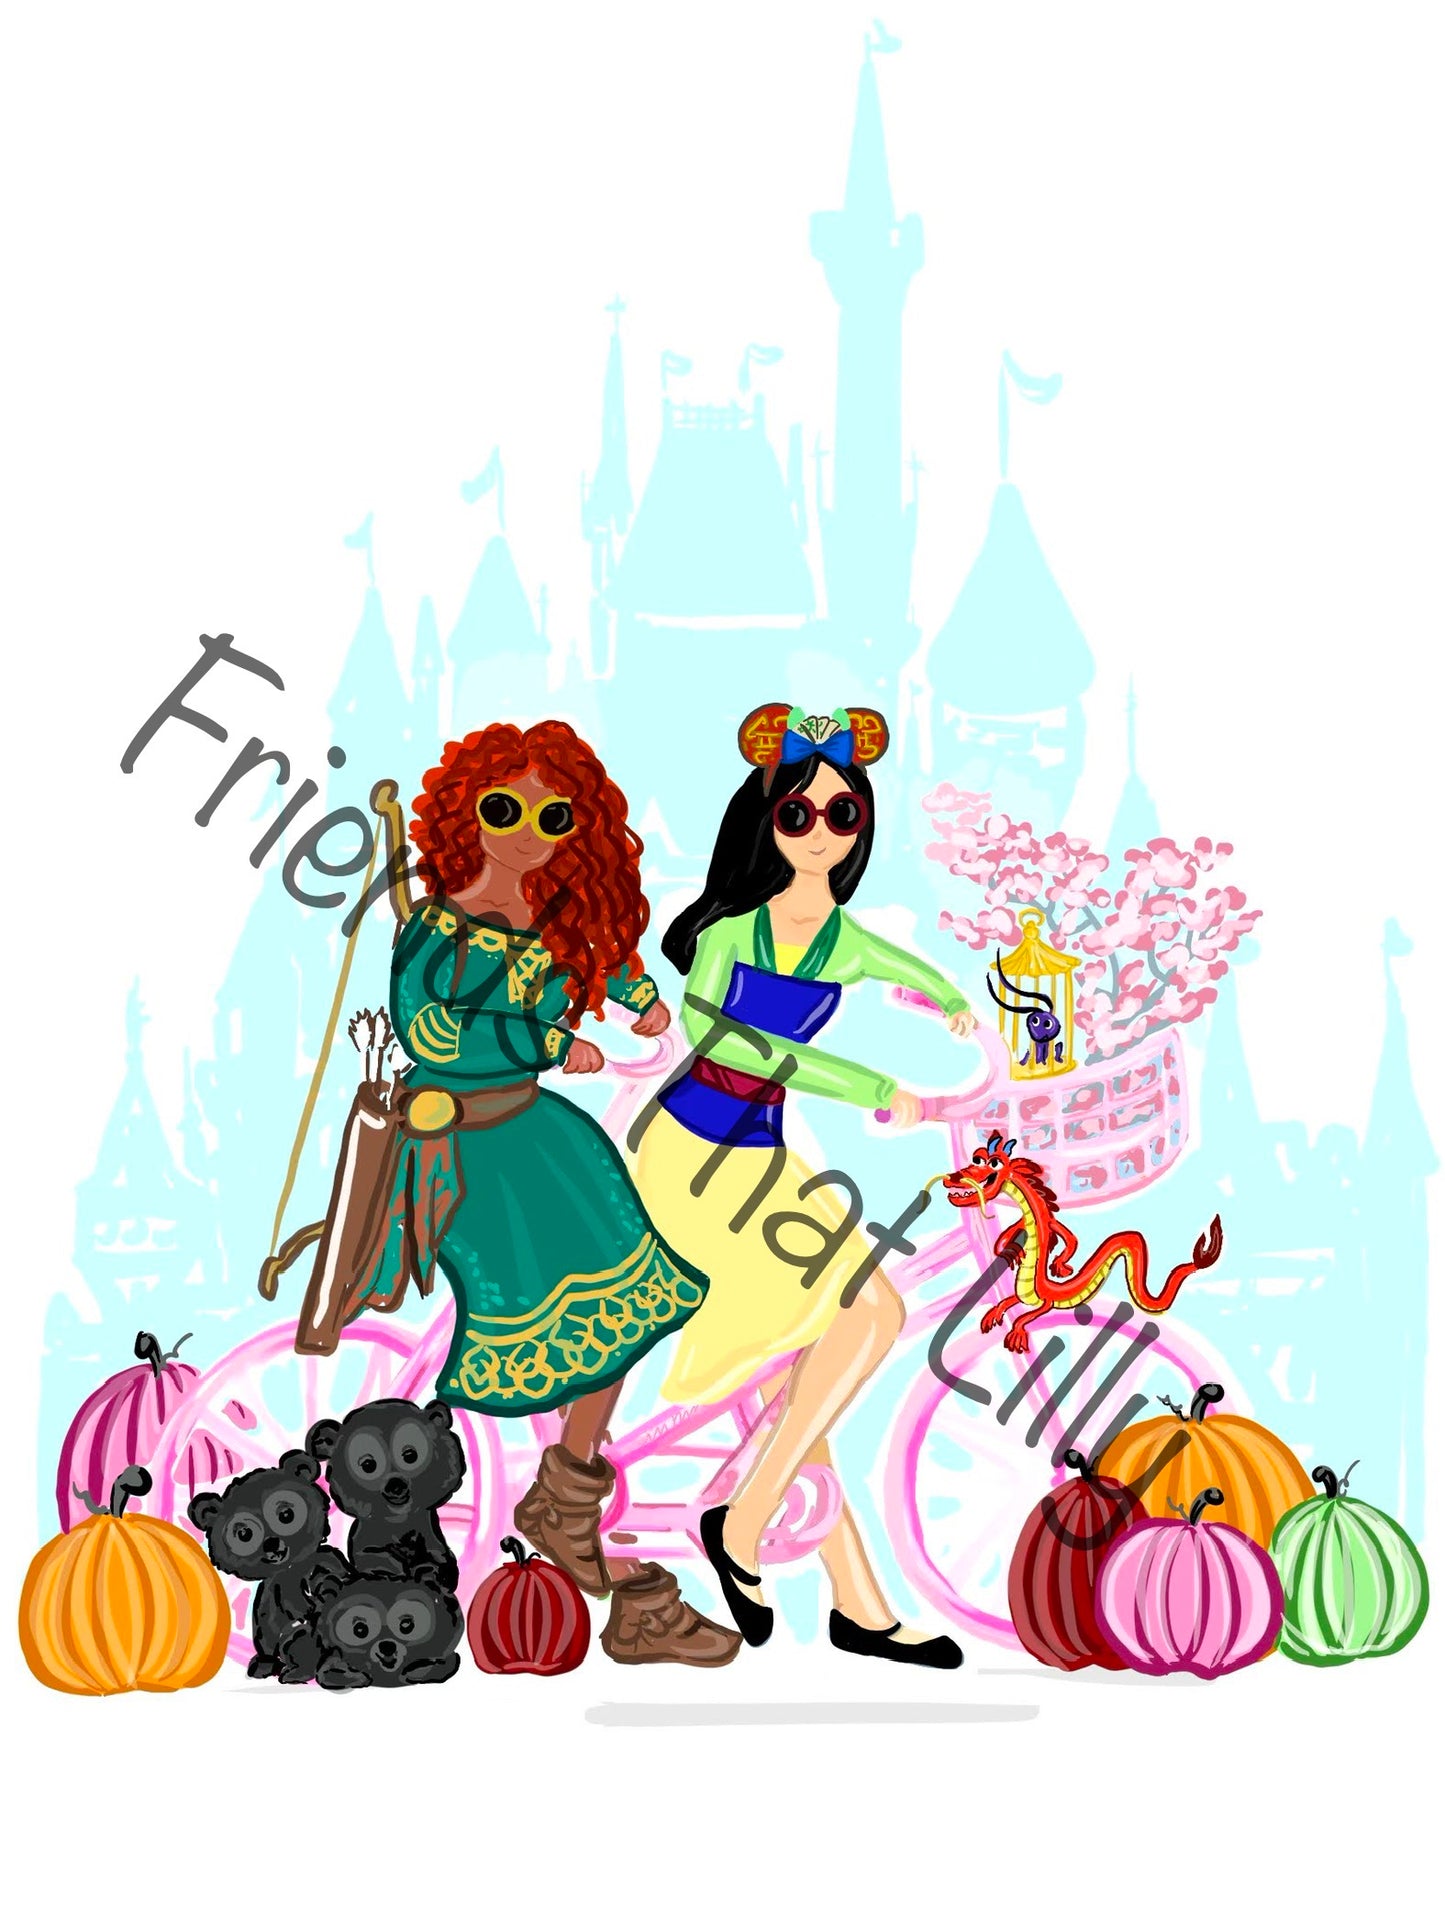 SALE! FTL Warrior Princesses w/ Pumpkins Illustration Shirt